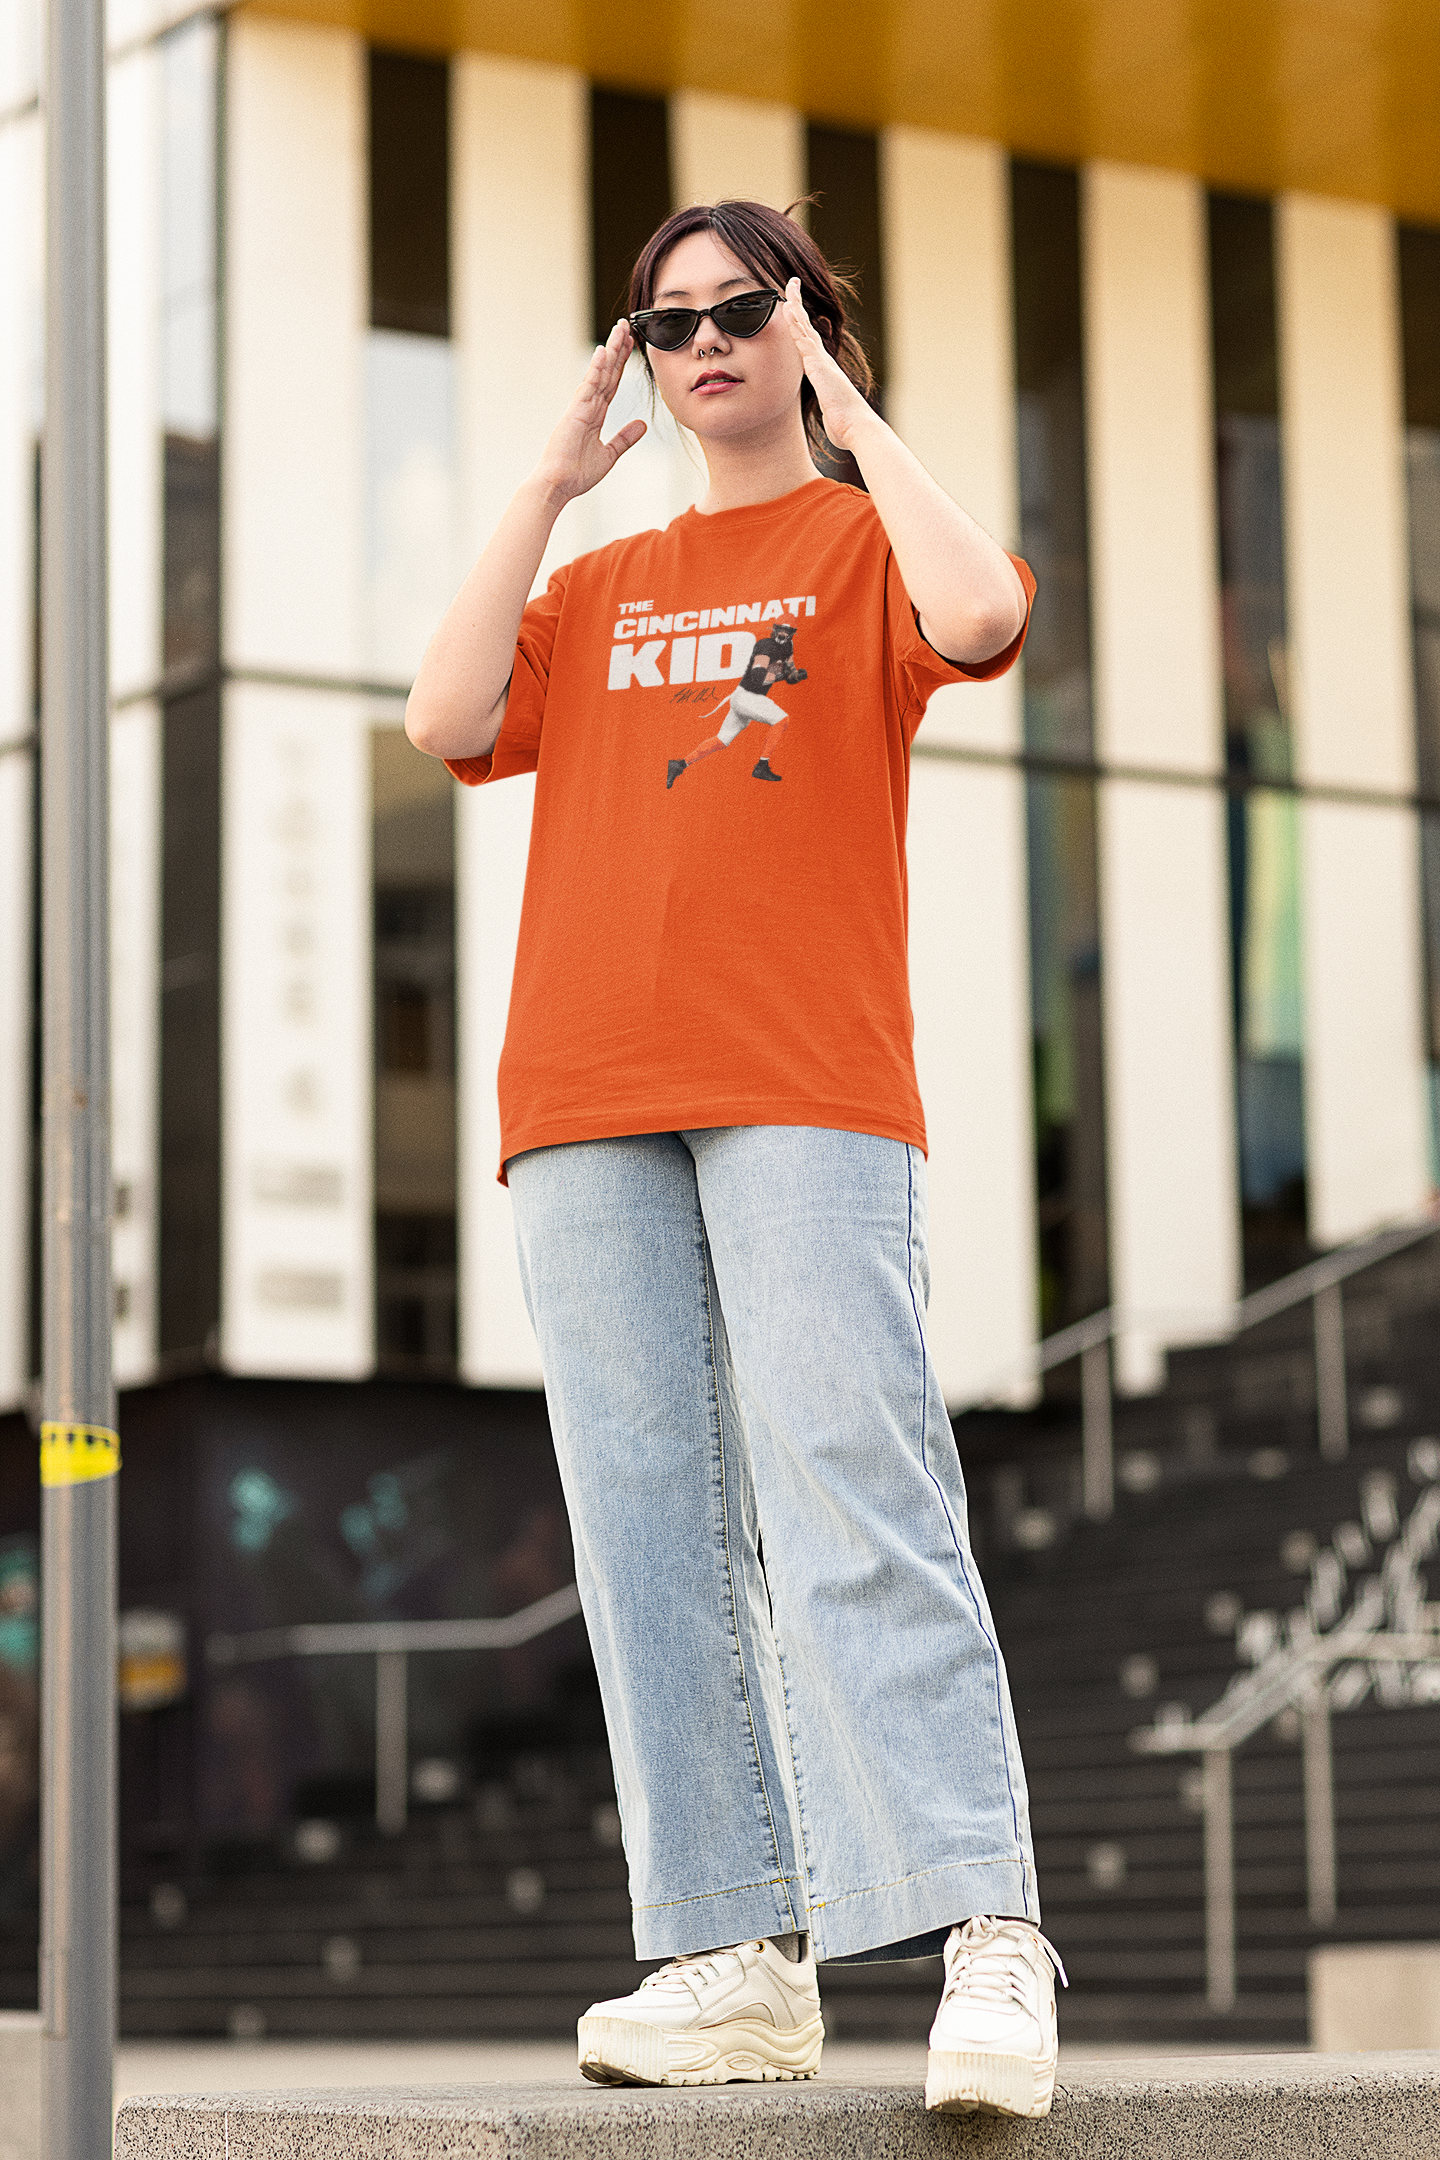 The Cincinnati Kid T-Shirt - UNISEX